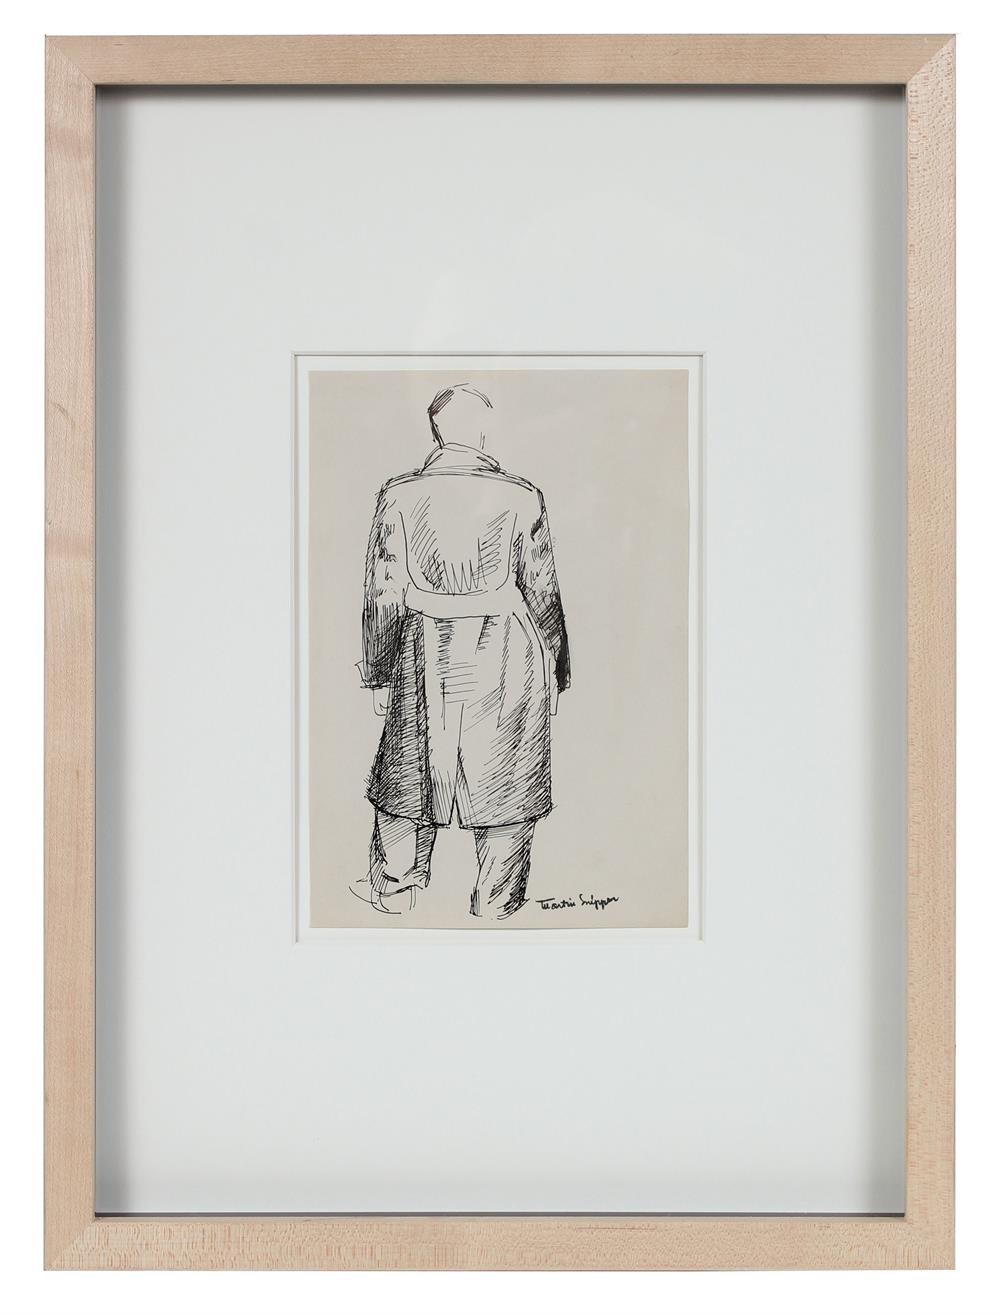 Man in Trench Coat&lt;br&gt;Mid Century Ink Sketch&lt;br&gt;&lt;br&gt;#49788